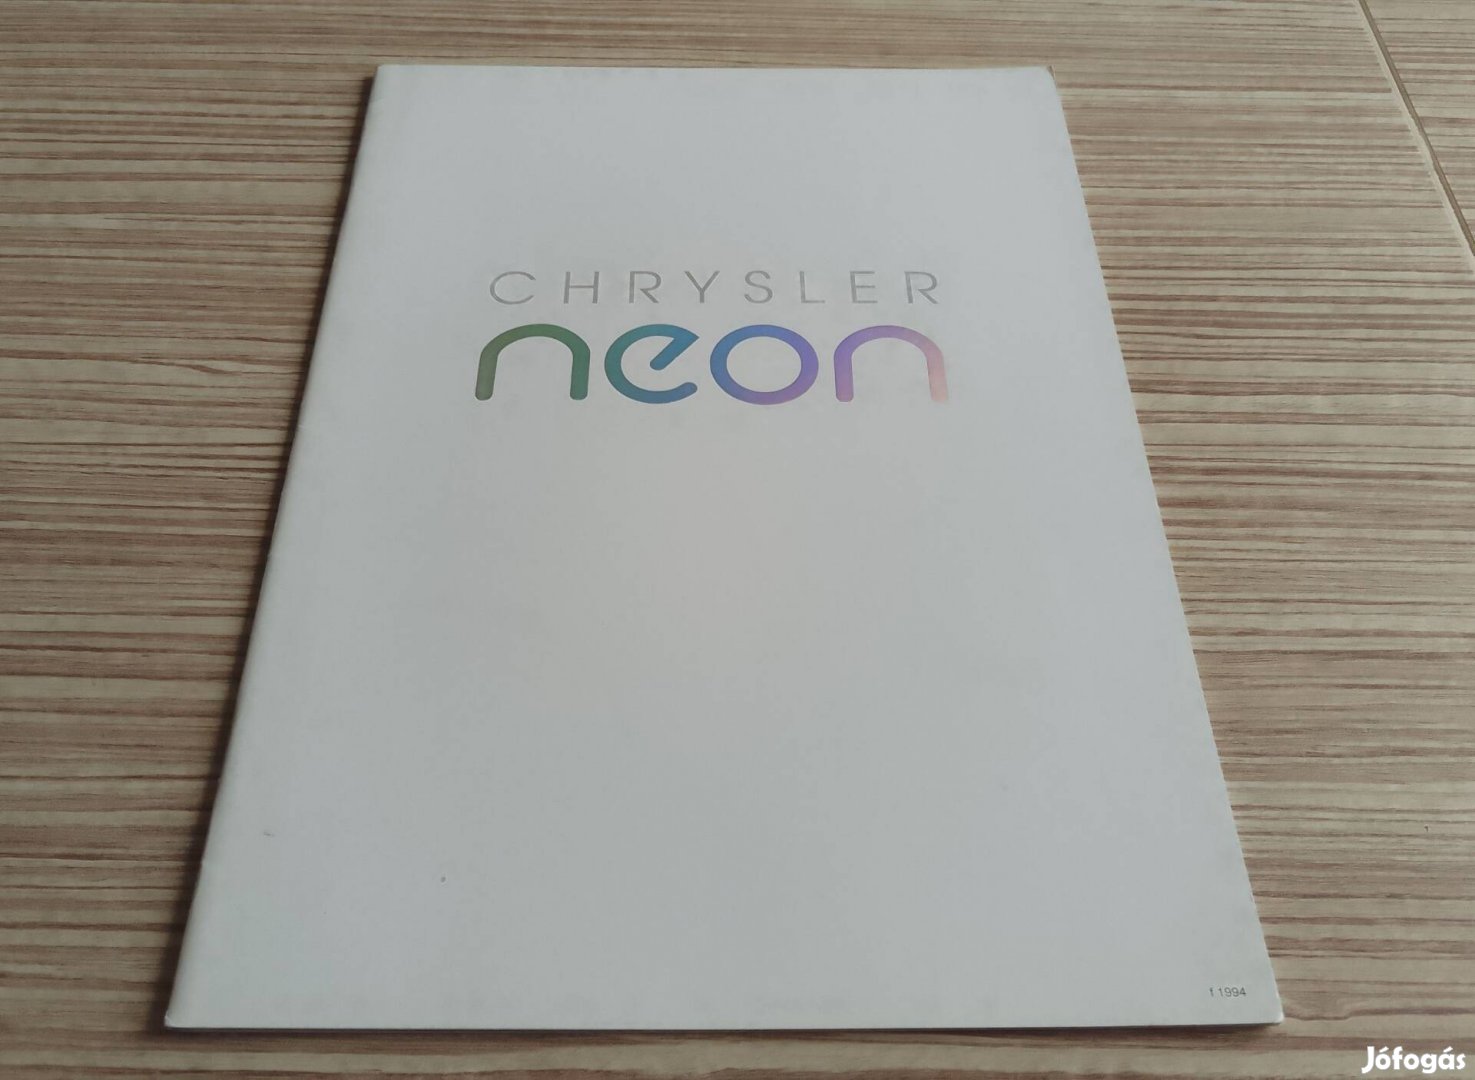 Chrysler Neon (1994) prospektus, katalógus.